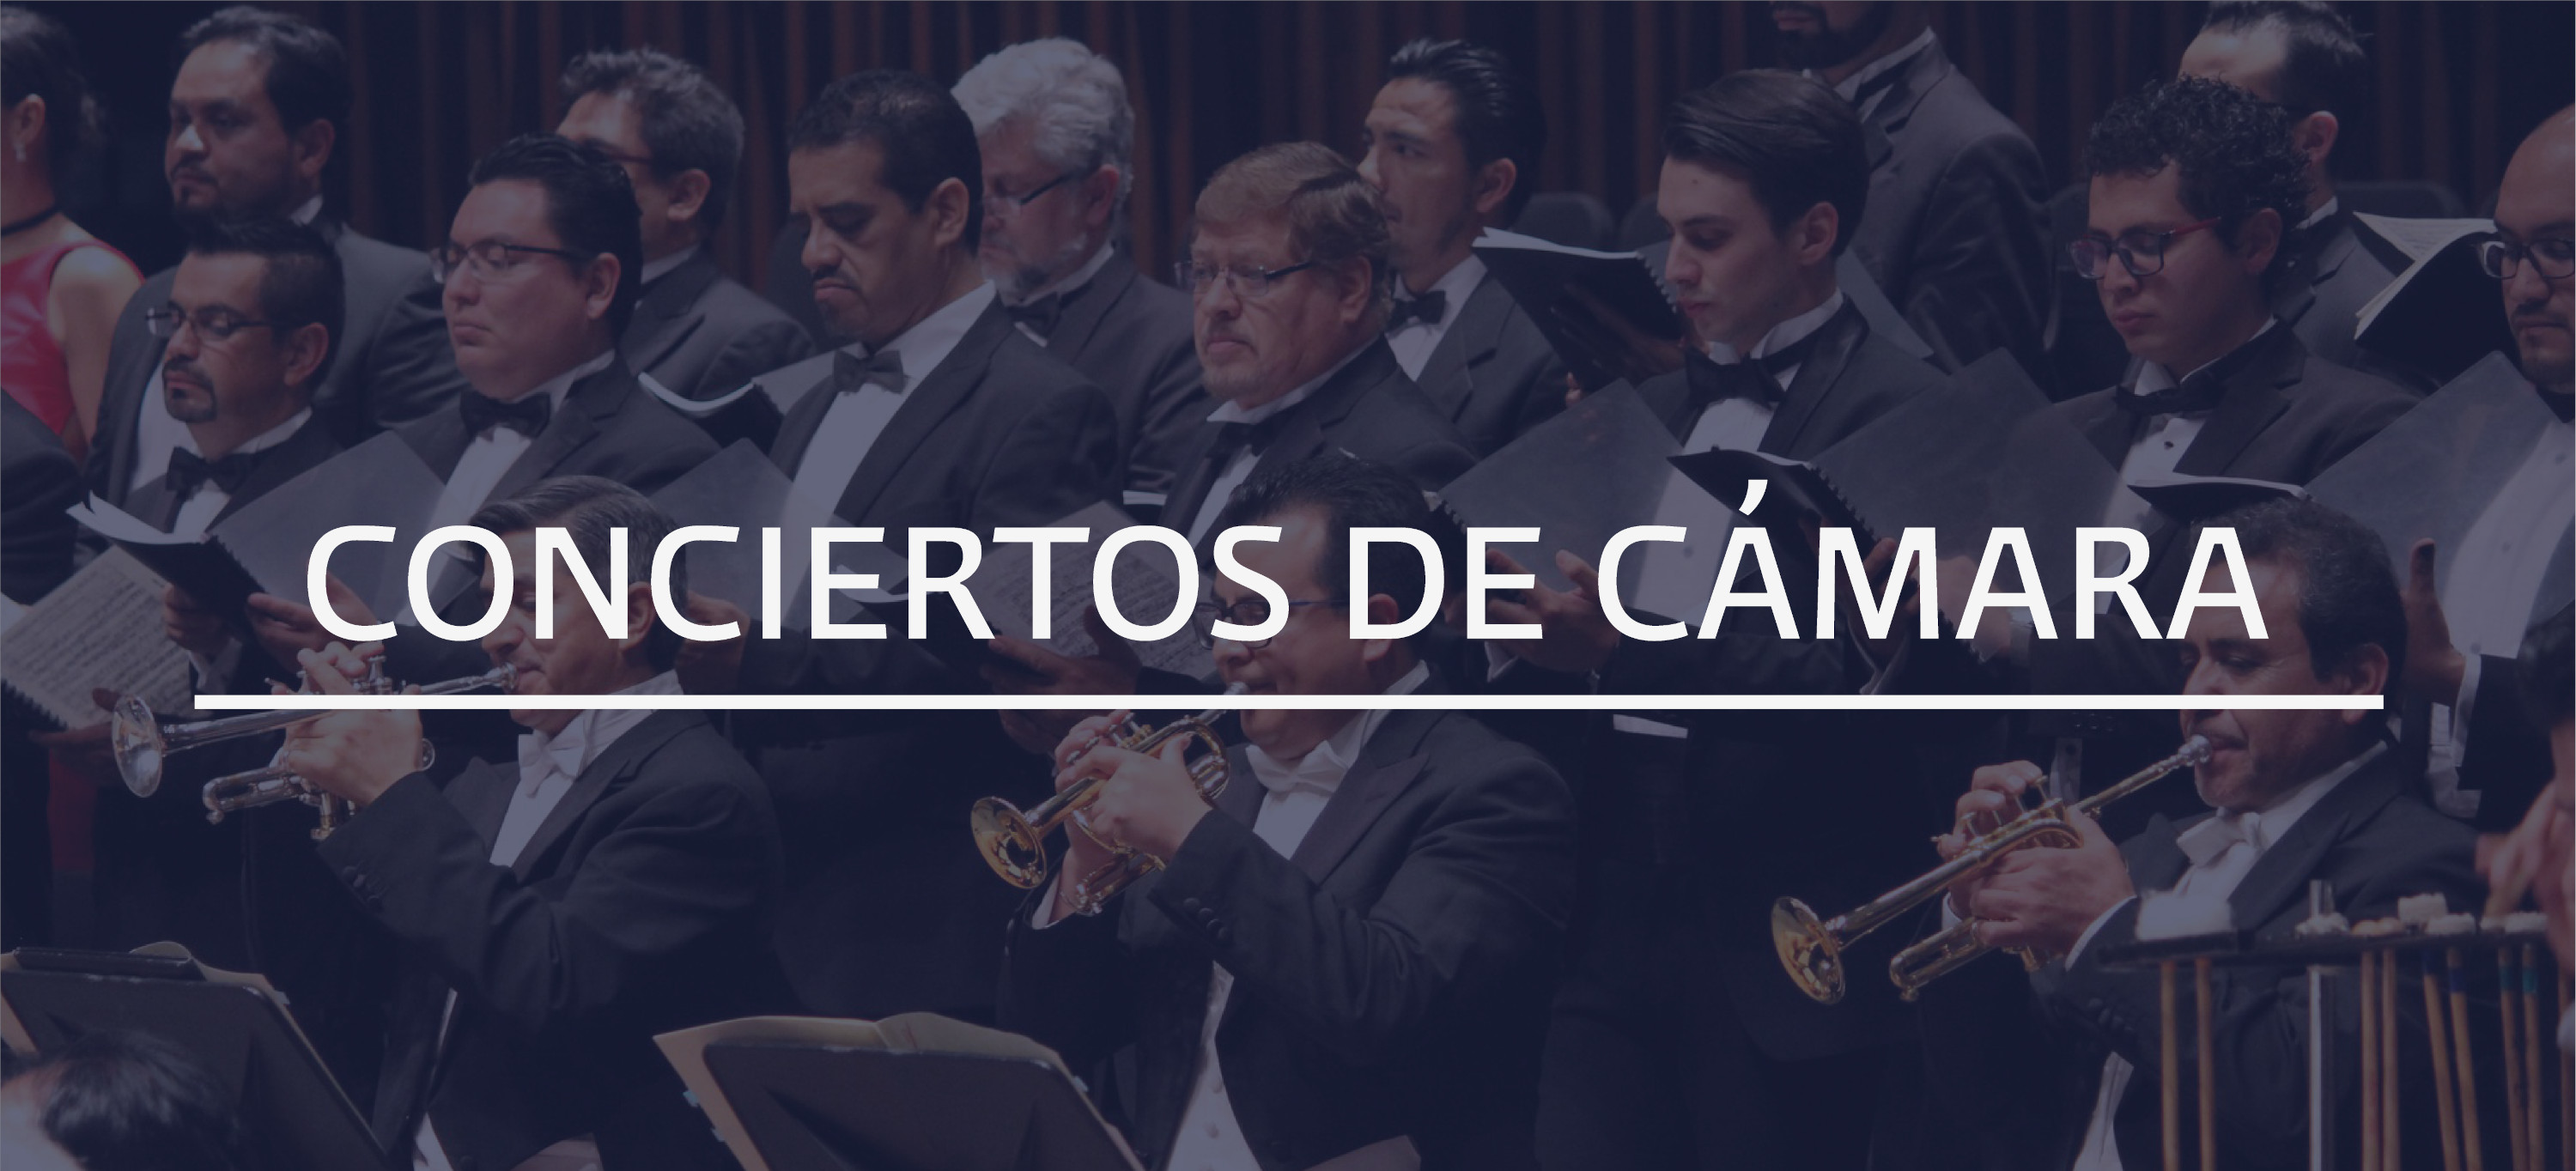 Integrantes de la Orquesta Sinfónica Nacional de México